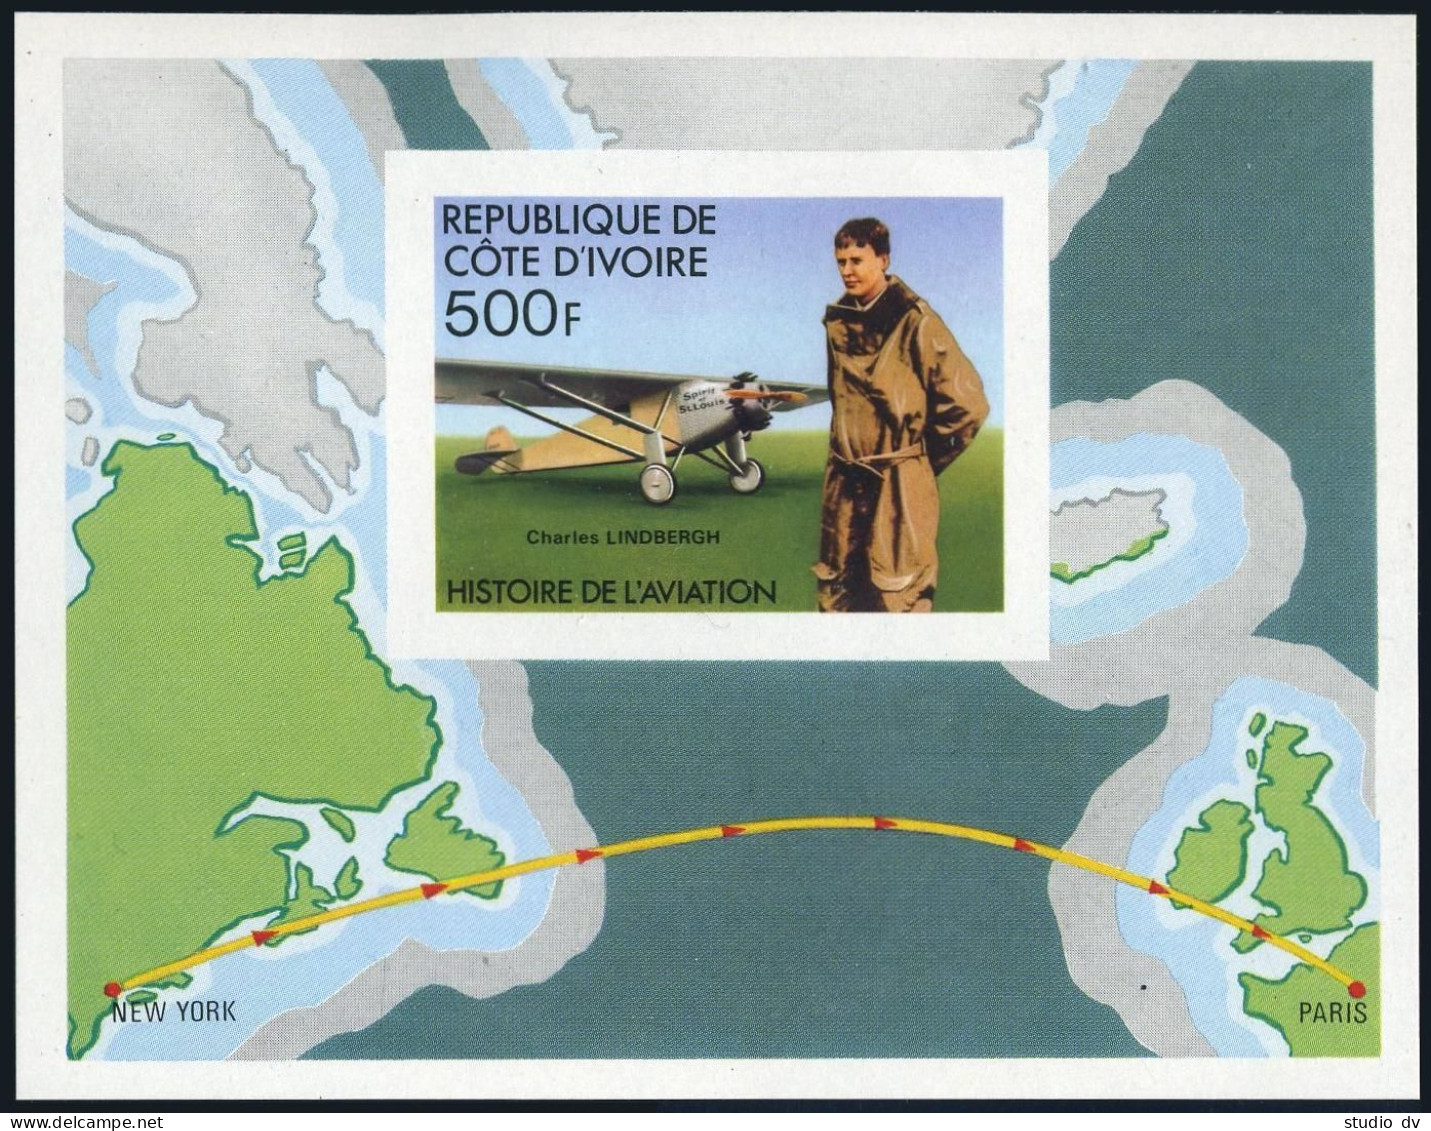 Ivory Coast 434-438,439 Imperf,MNH. Charles Lindbergh Solo Flight,1977. - Ivory Coast (1960-...)